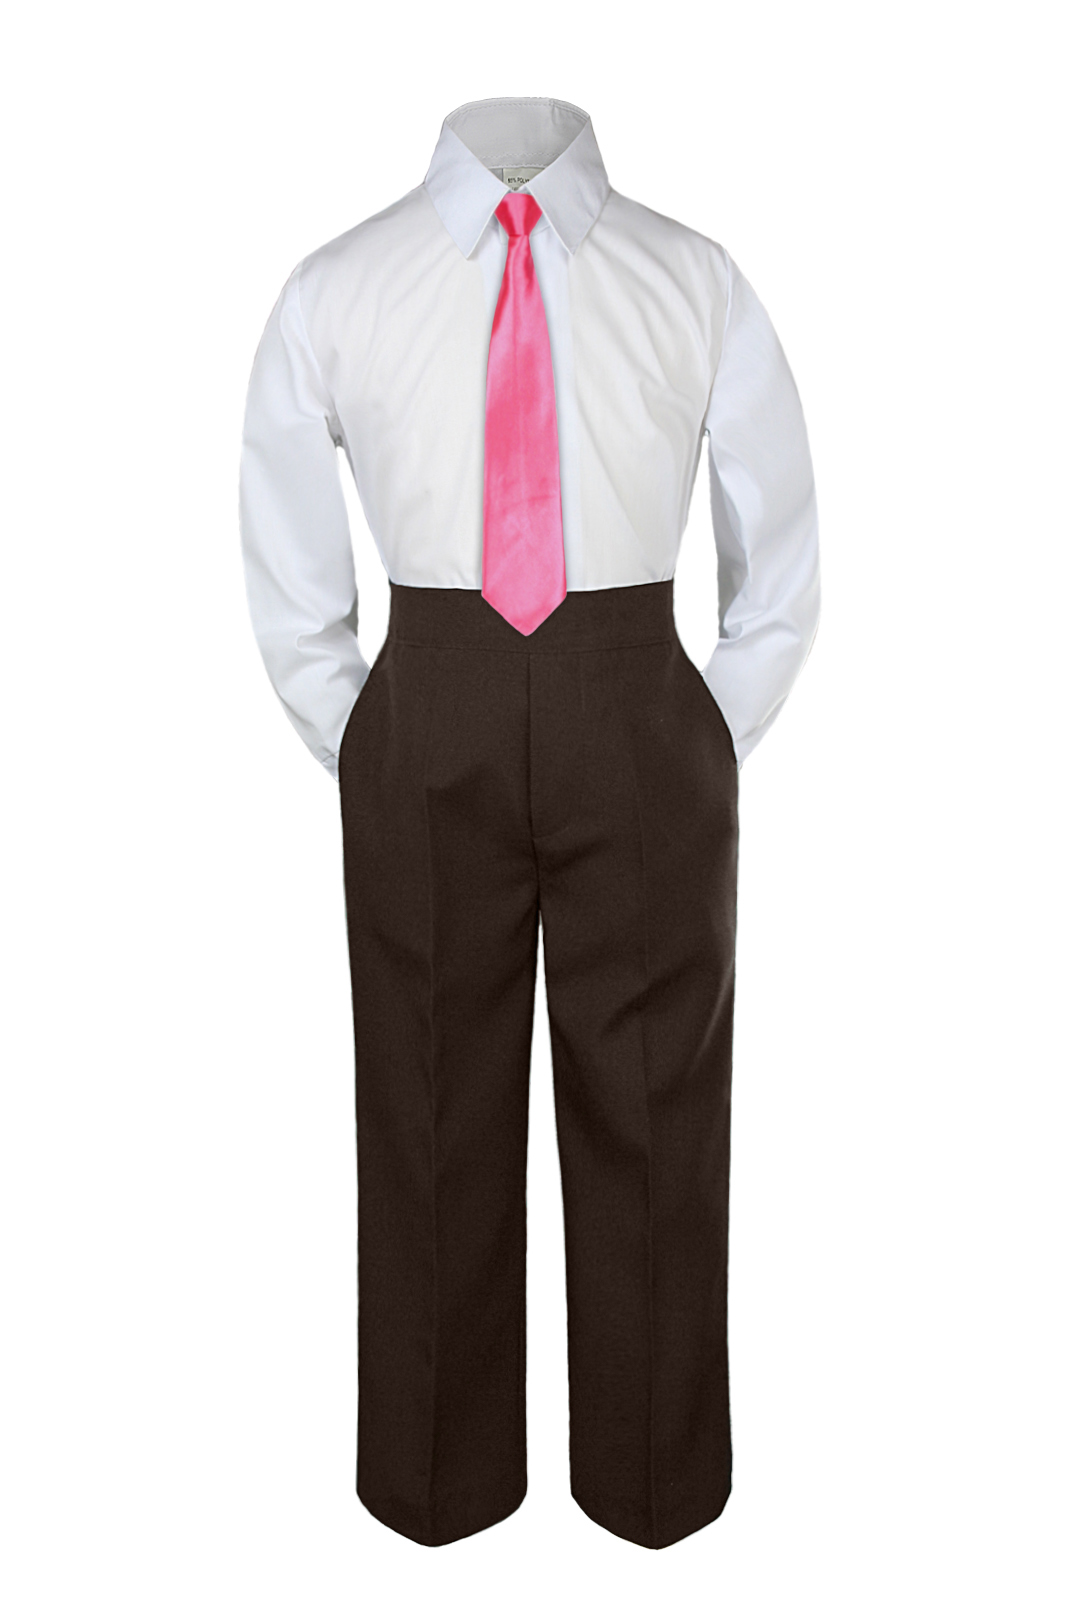 Leadertux 3pc S M L XL 2T 3T 4T Baby Toddler Boys Shirt Pants Suits Tuxedo Formal Wedding Outfits Coral Peach Sunset Necktie Set